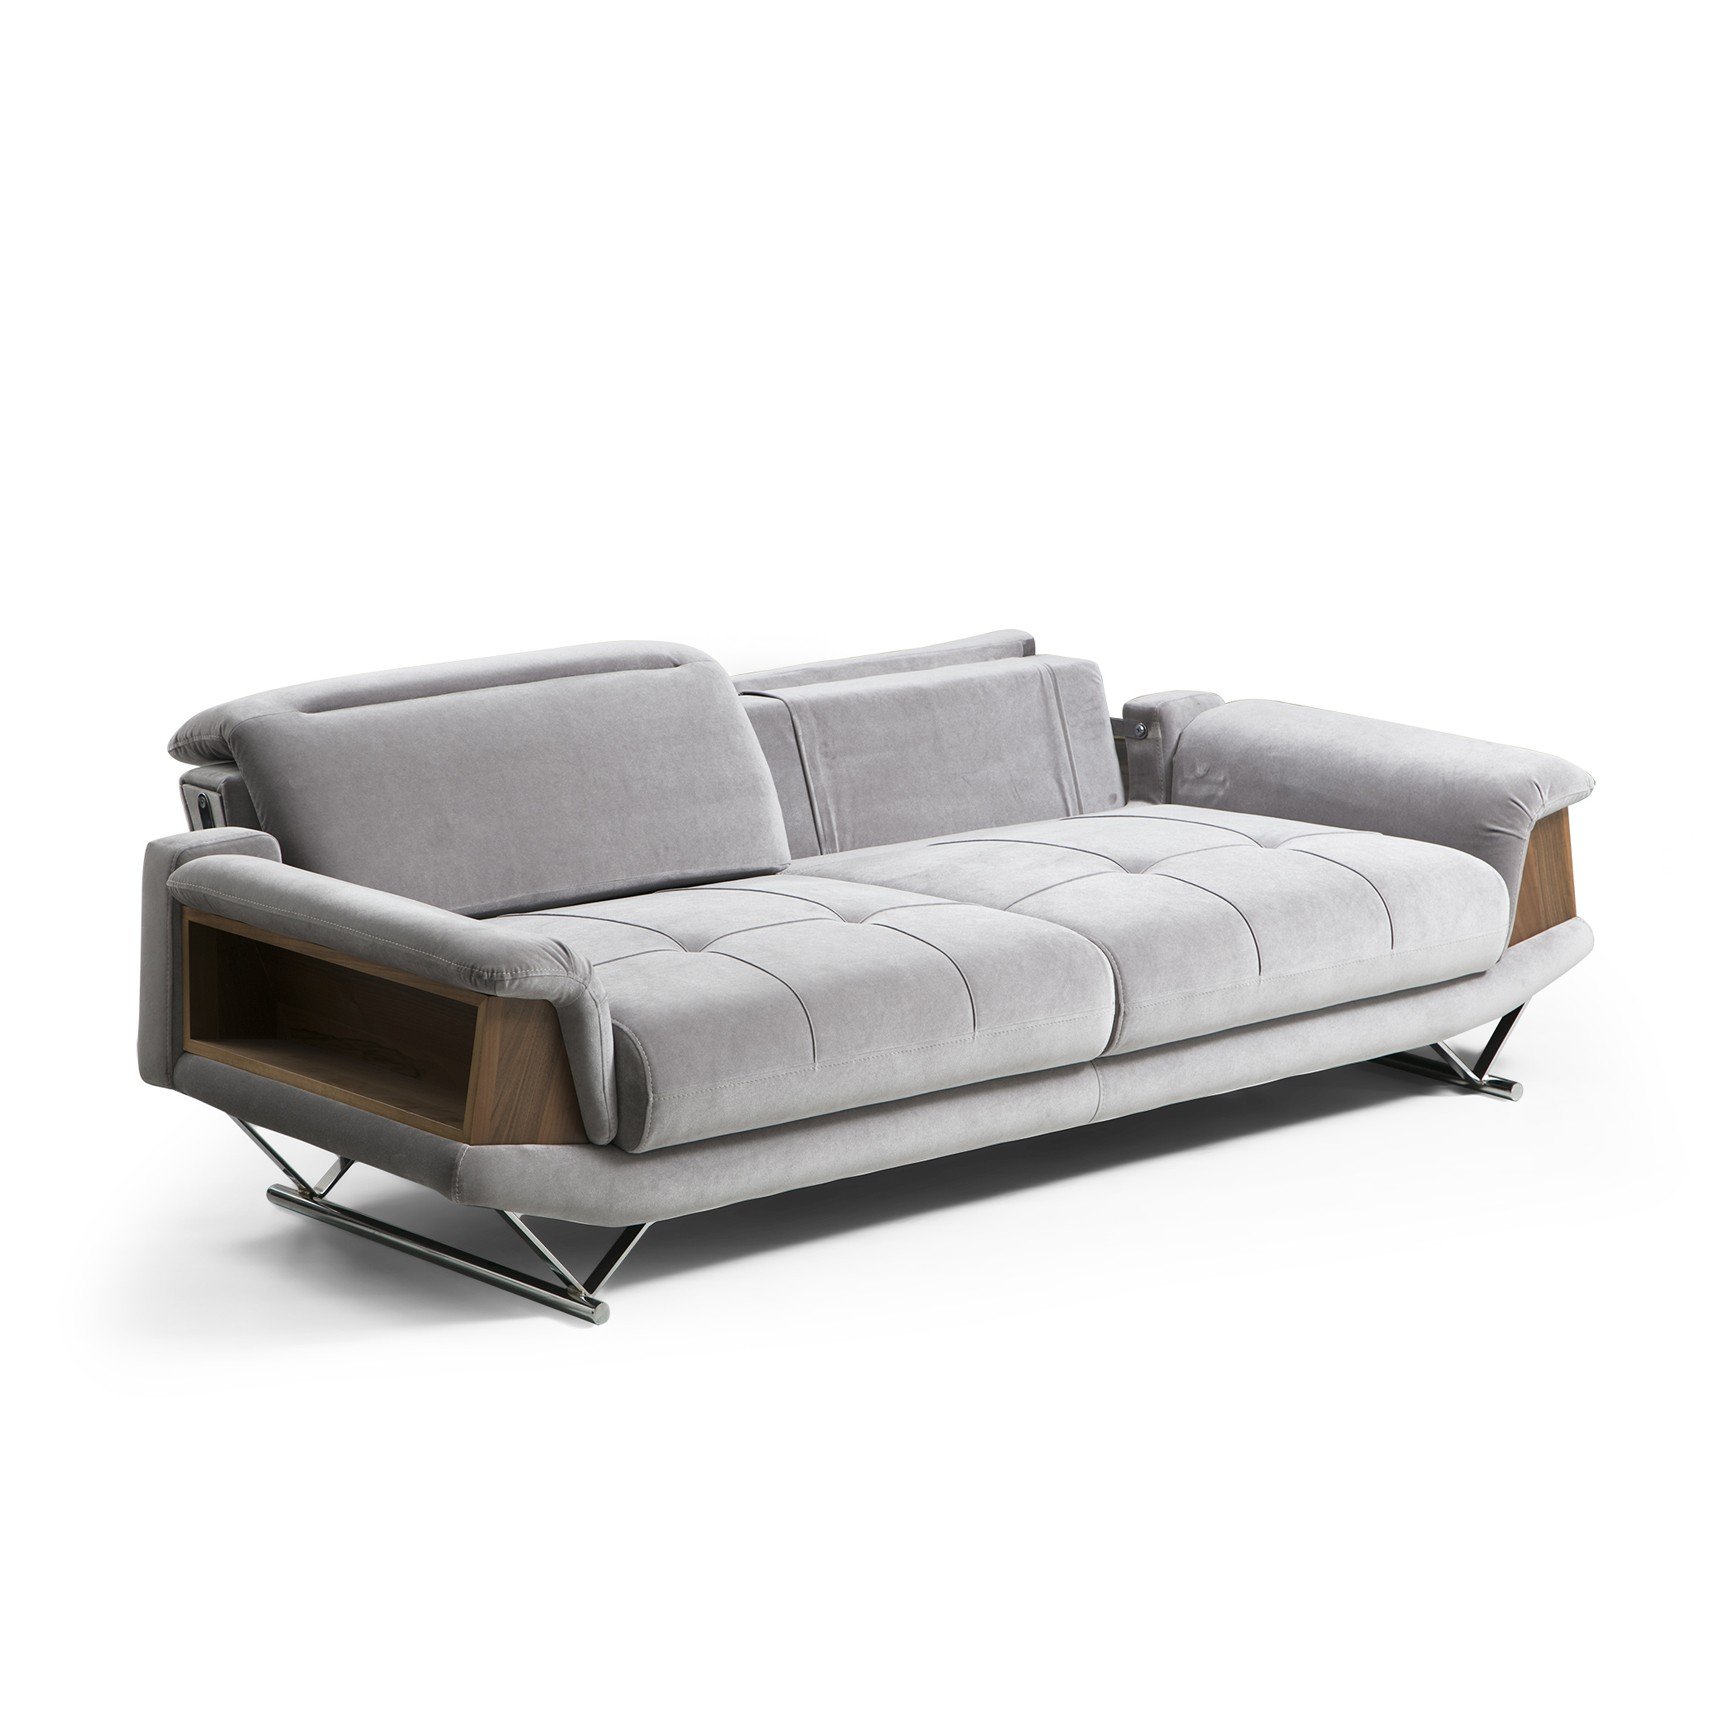 Oslo Vol3 Seater Sofa Bed